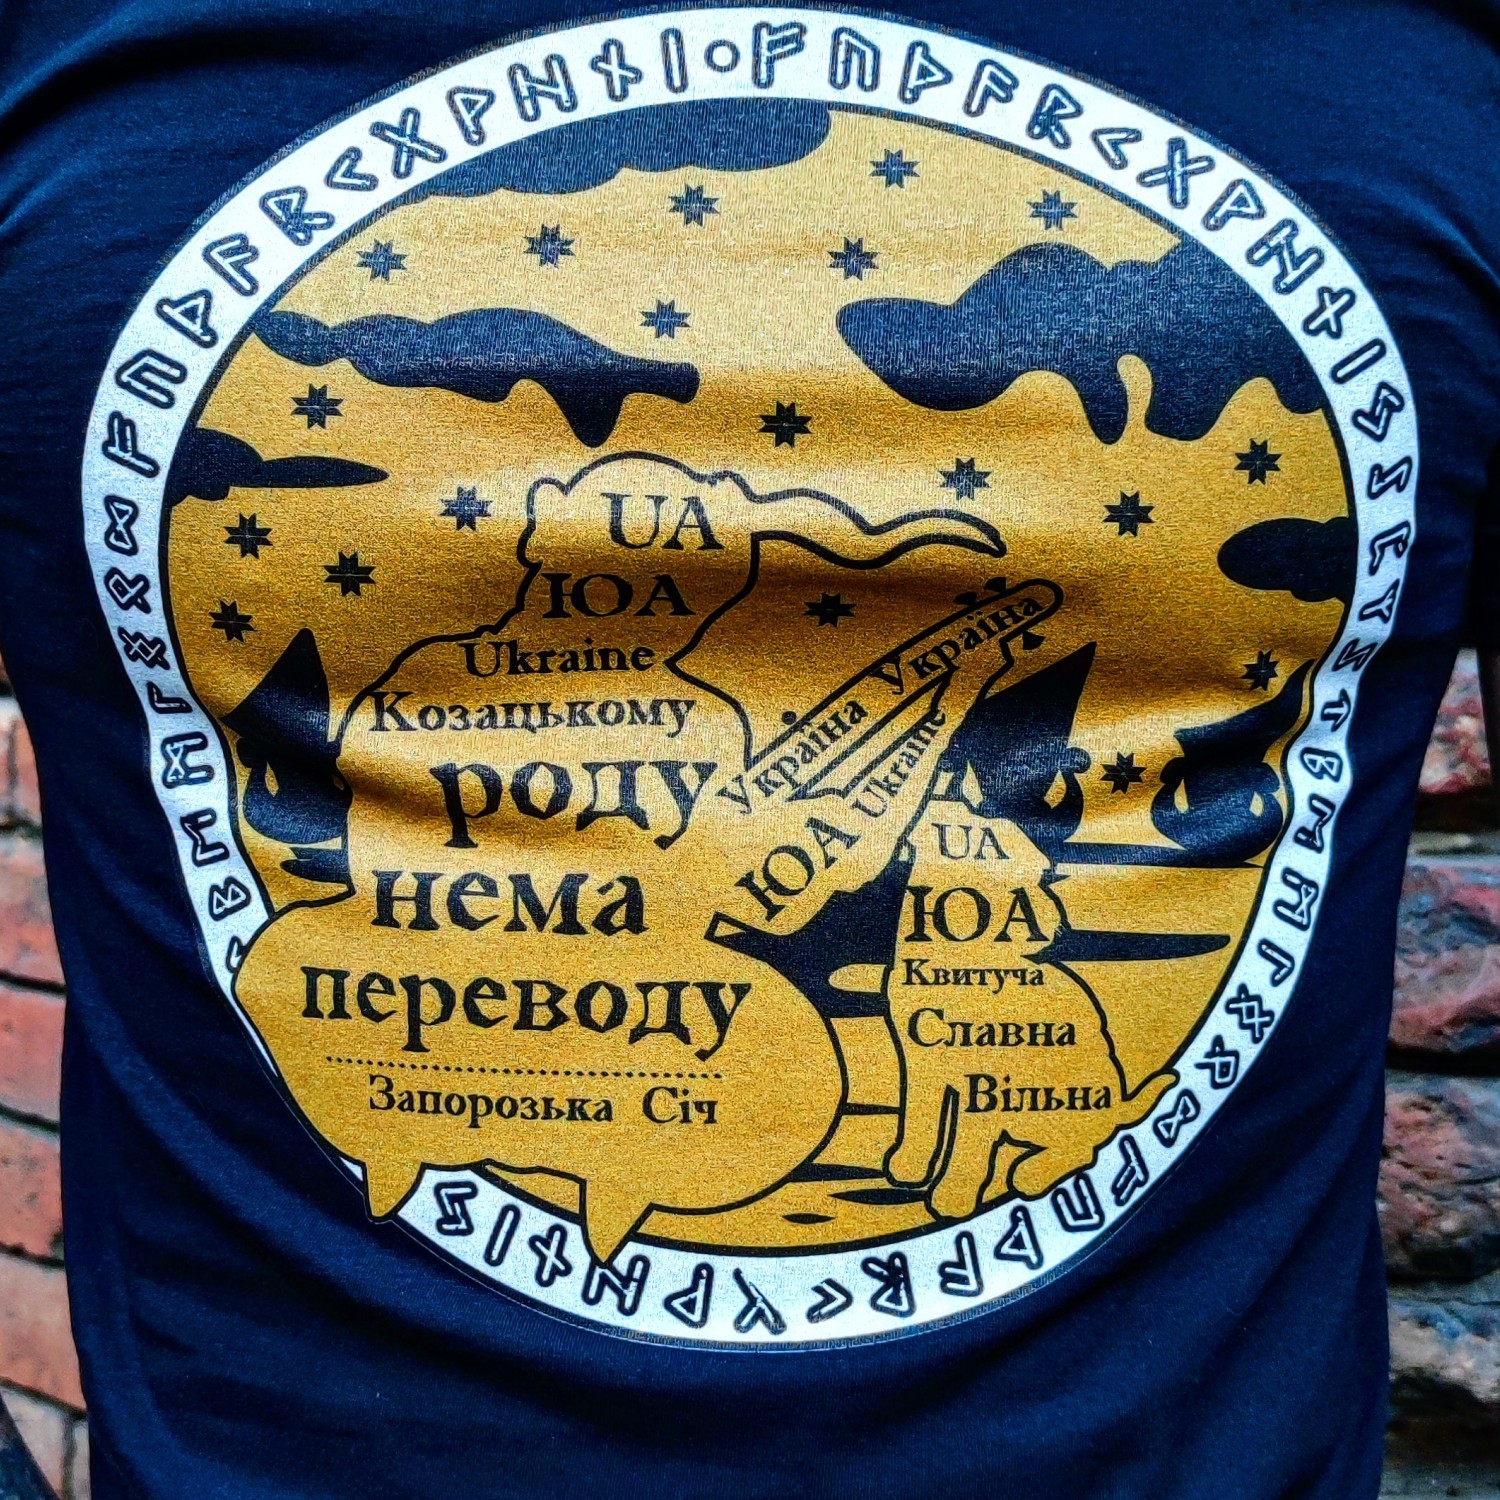 T-shirt "Cossack Rod has no translation"